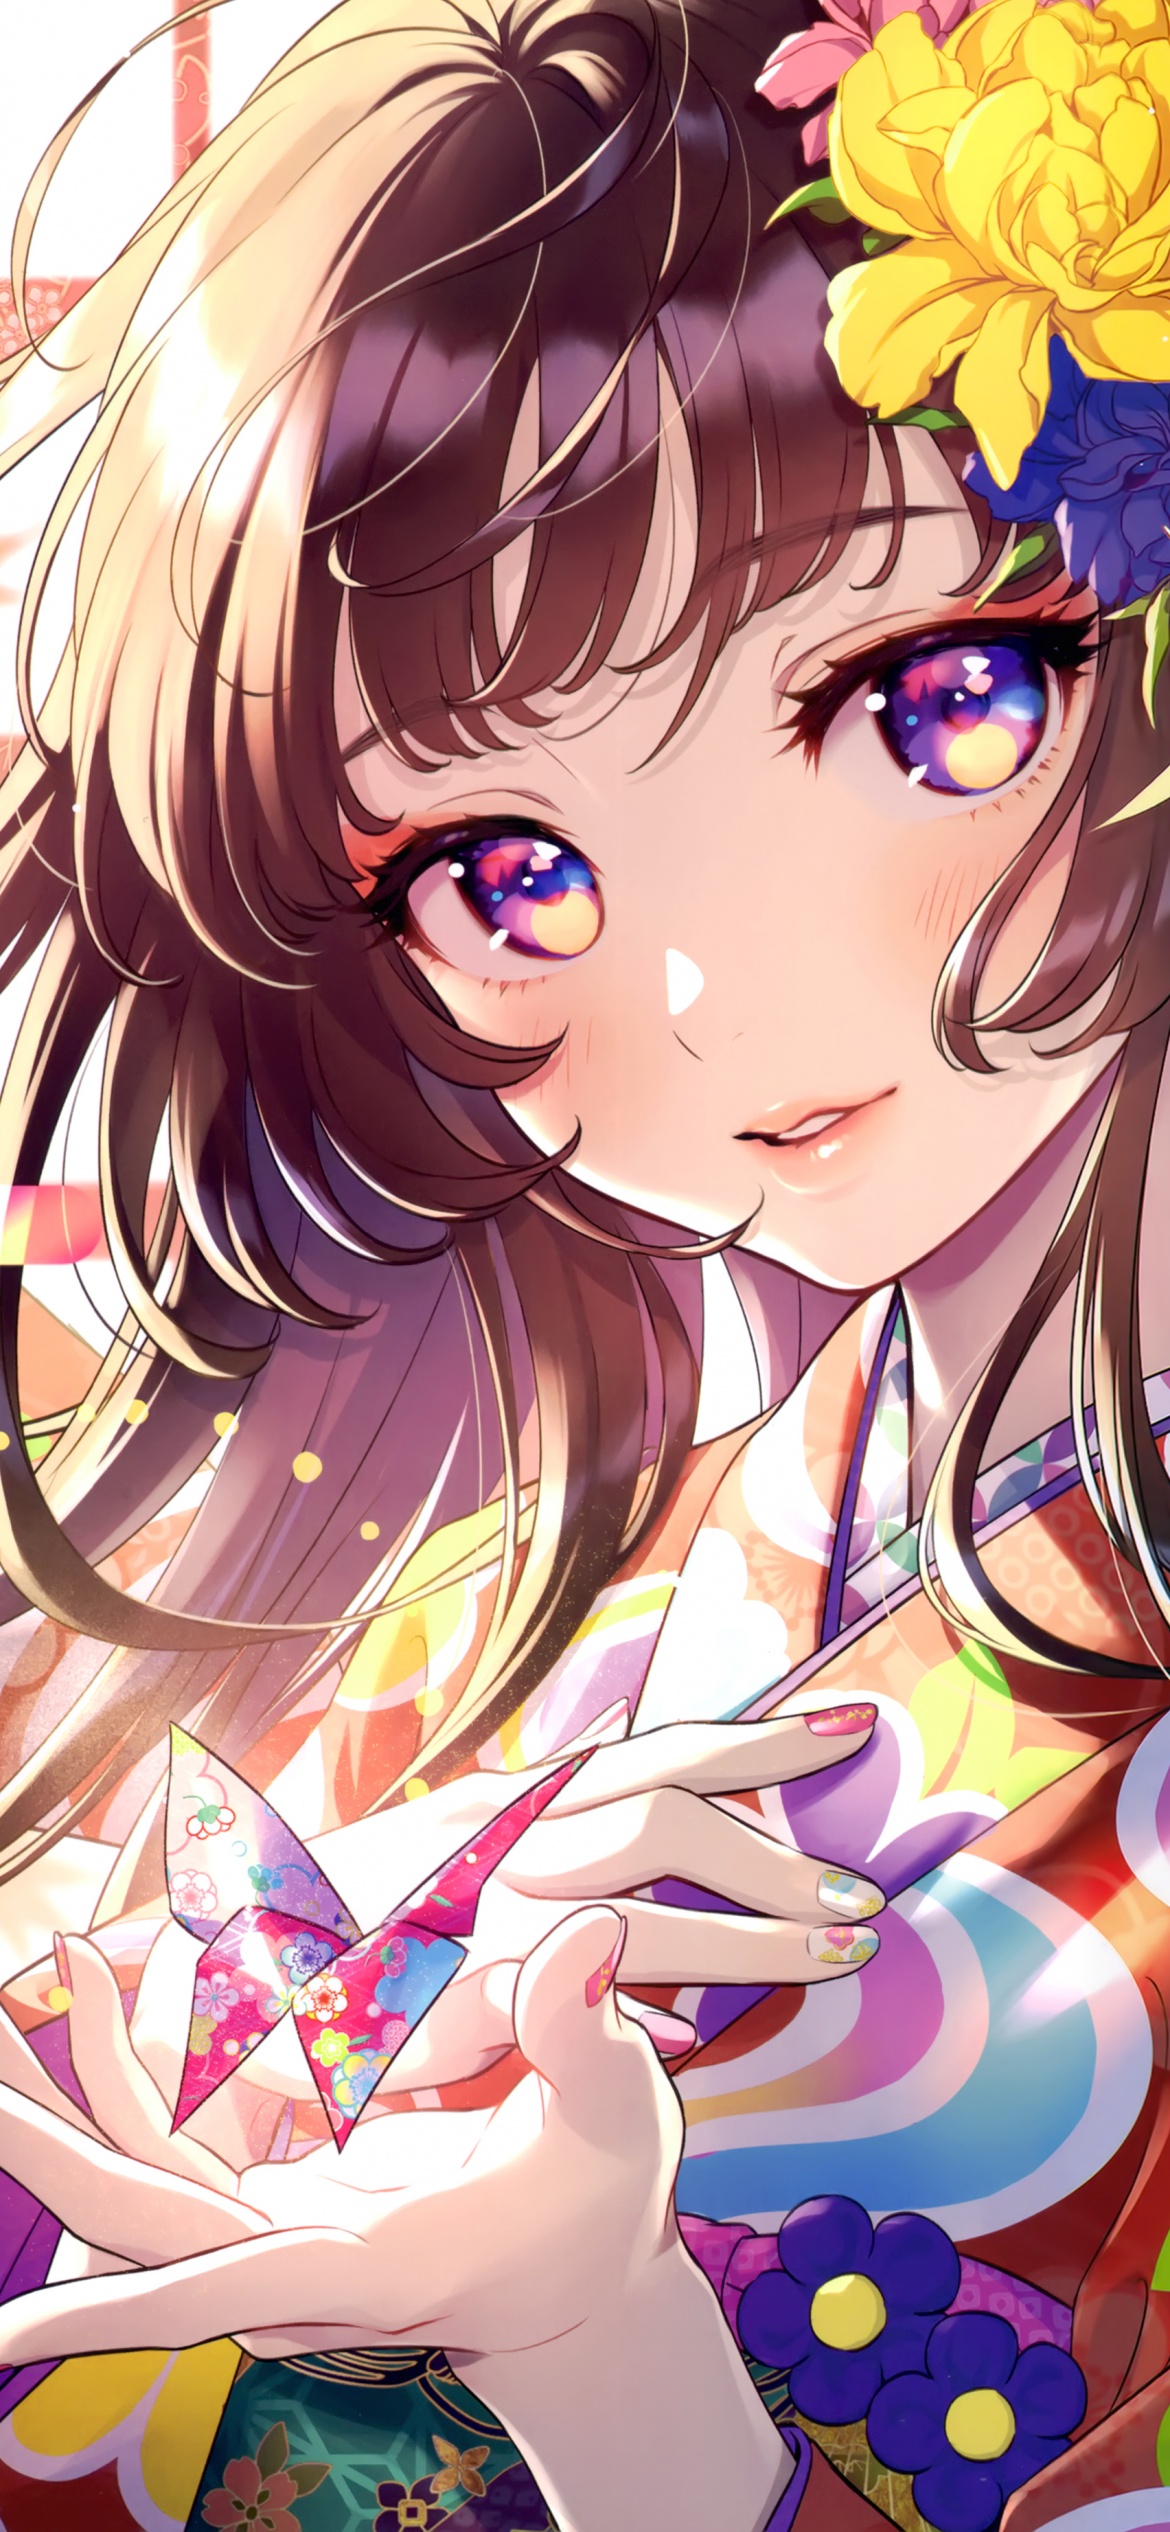 Anime girl Wallpaper 4K, Floral, Colorful, Girly, Magical, 5K, Fantasy